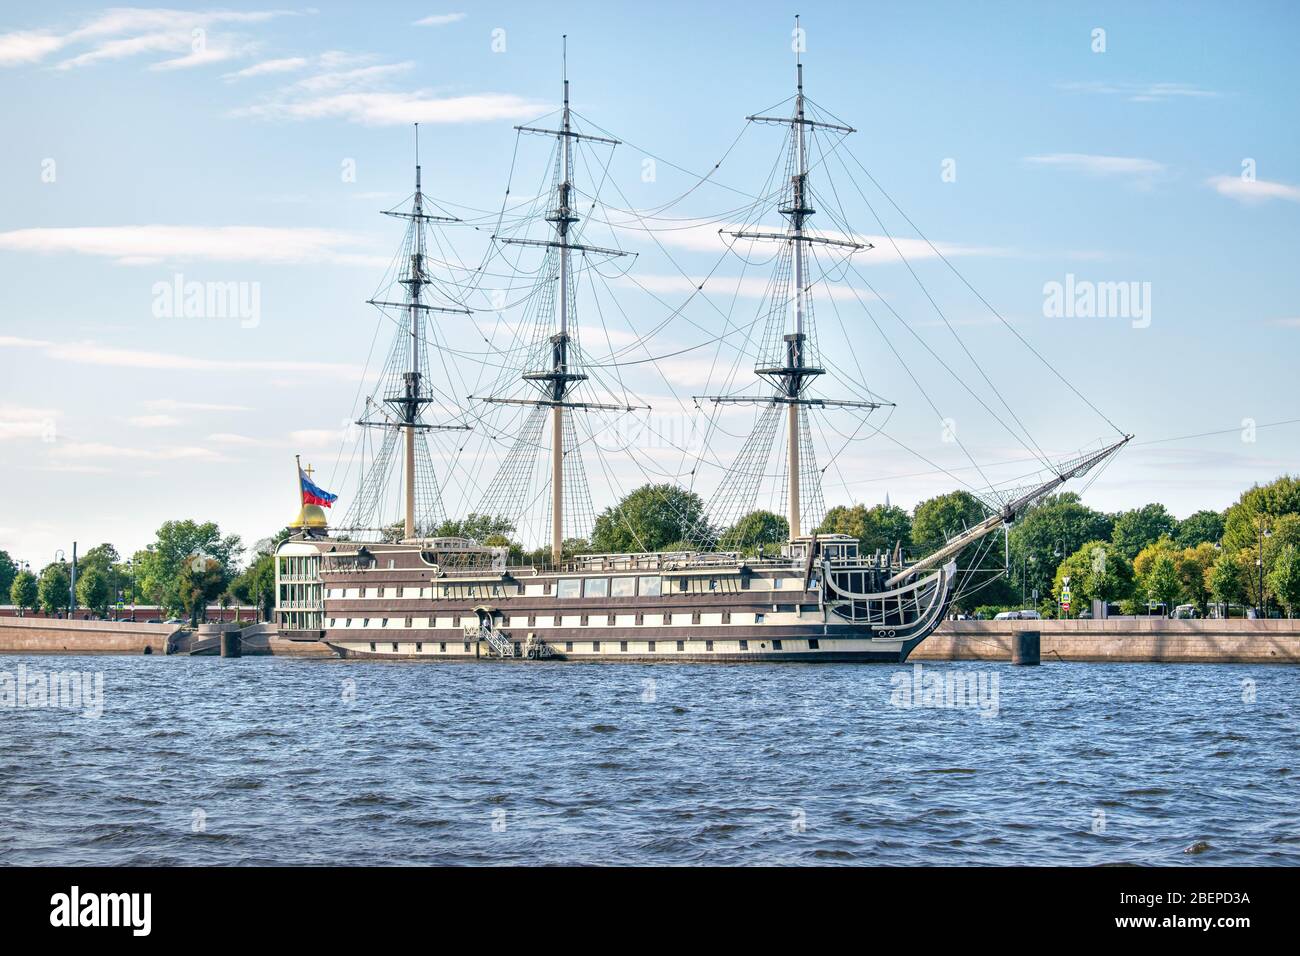 St. Petersburg, Russia, summer 2019: Floating restaurant 'Frigate Grace' on the Neva River near Petrovskaya Embankment Stock Photo